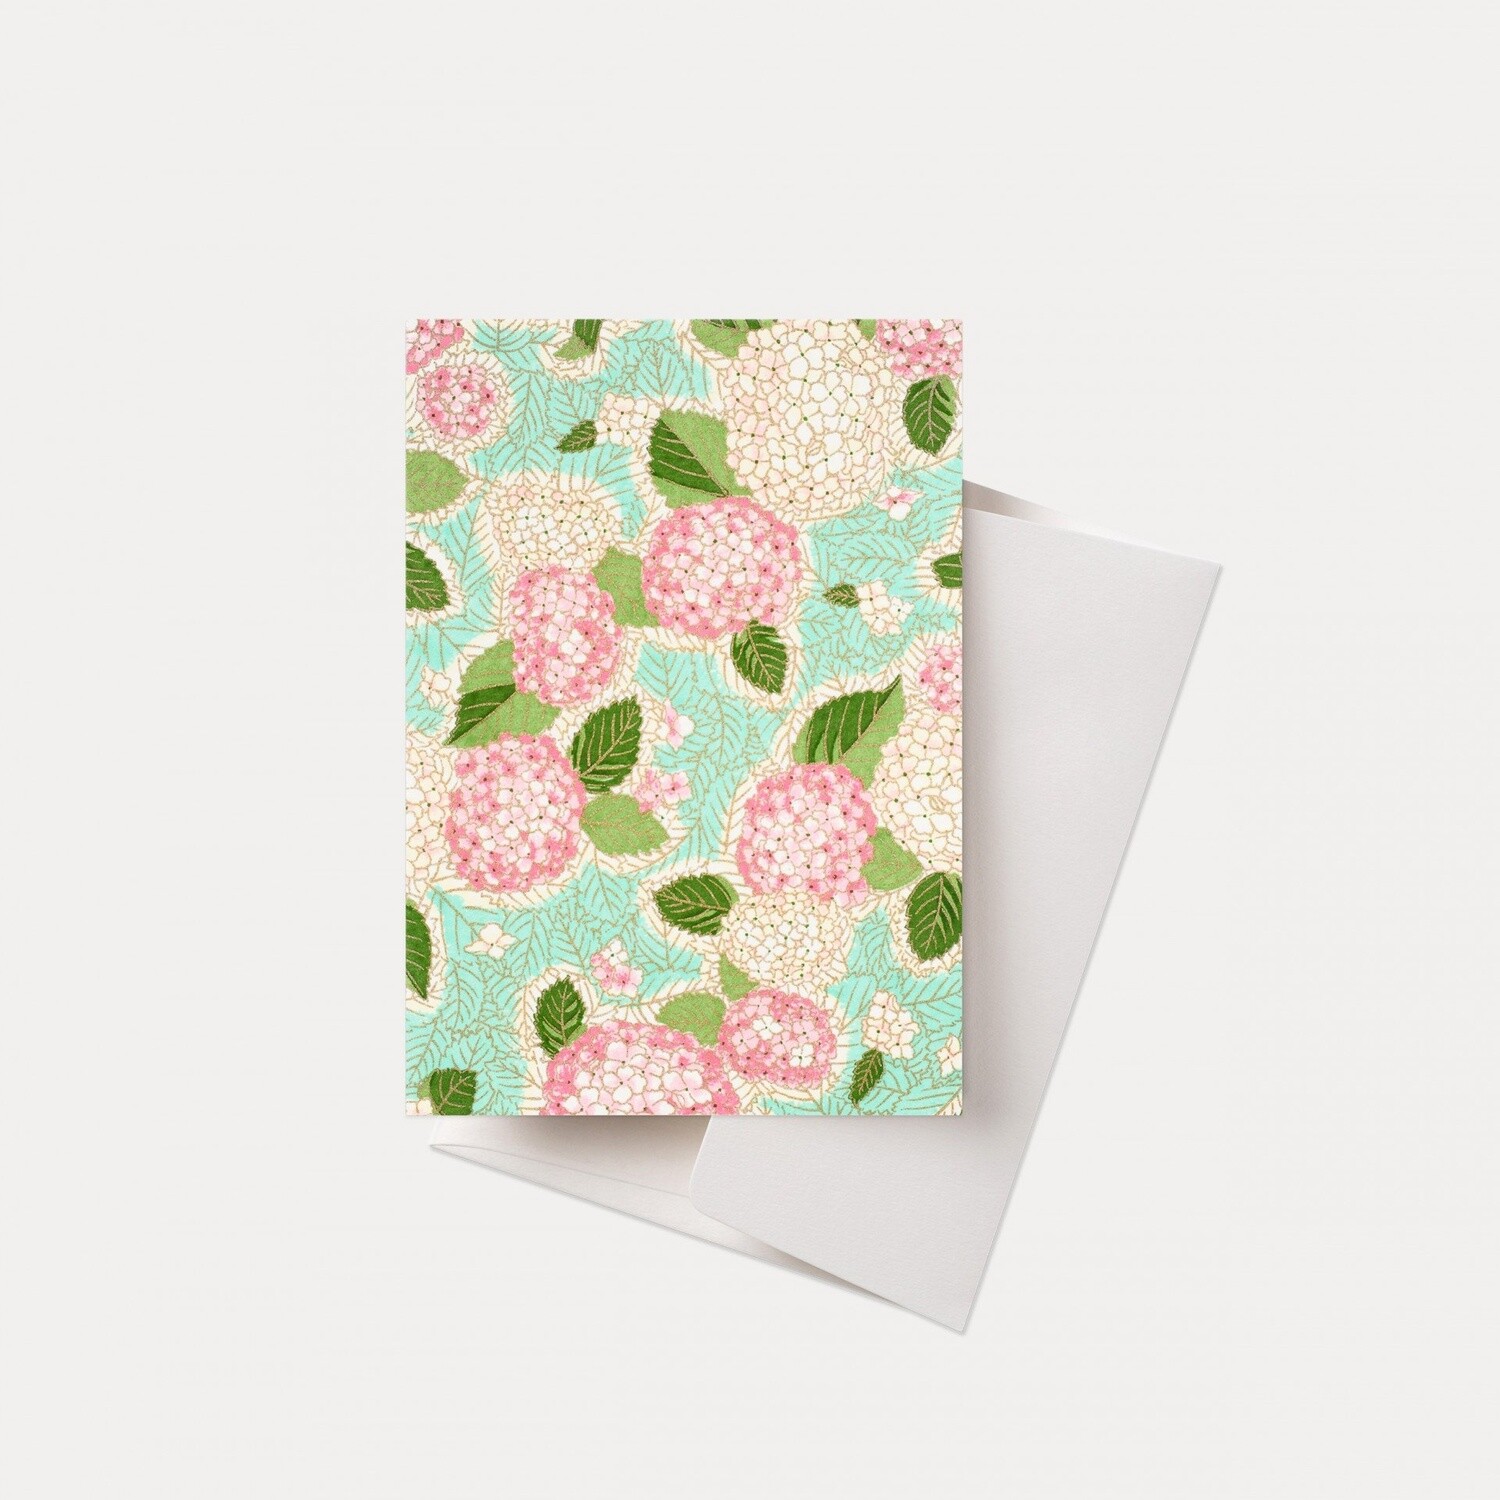 Handmade Greetings Card - Pink Hydrangea/Mint by Esmie